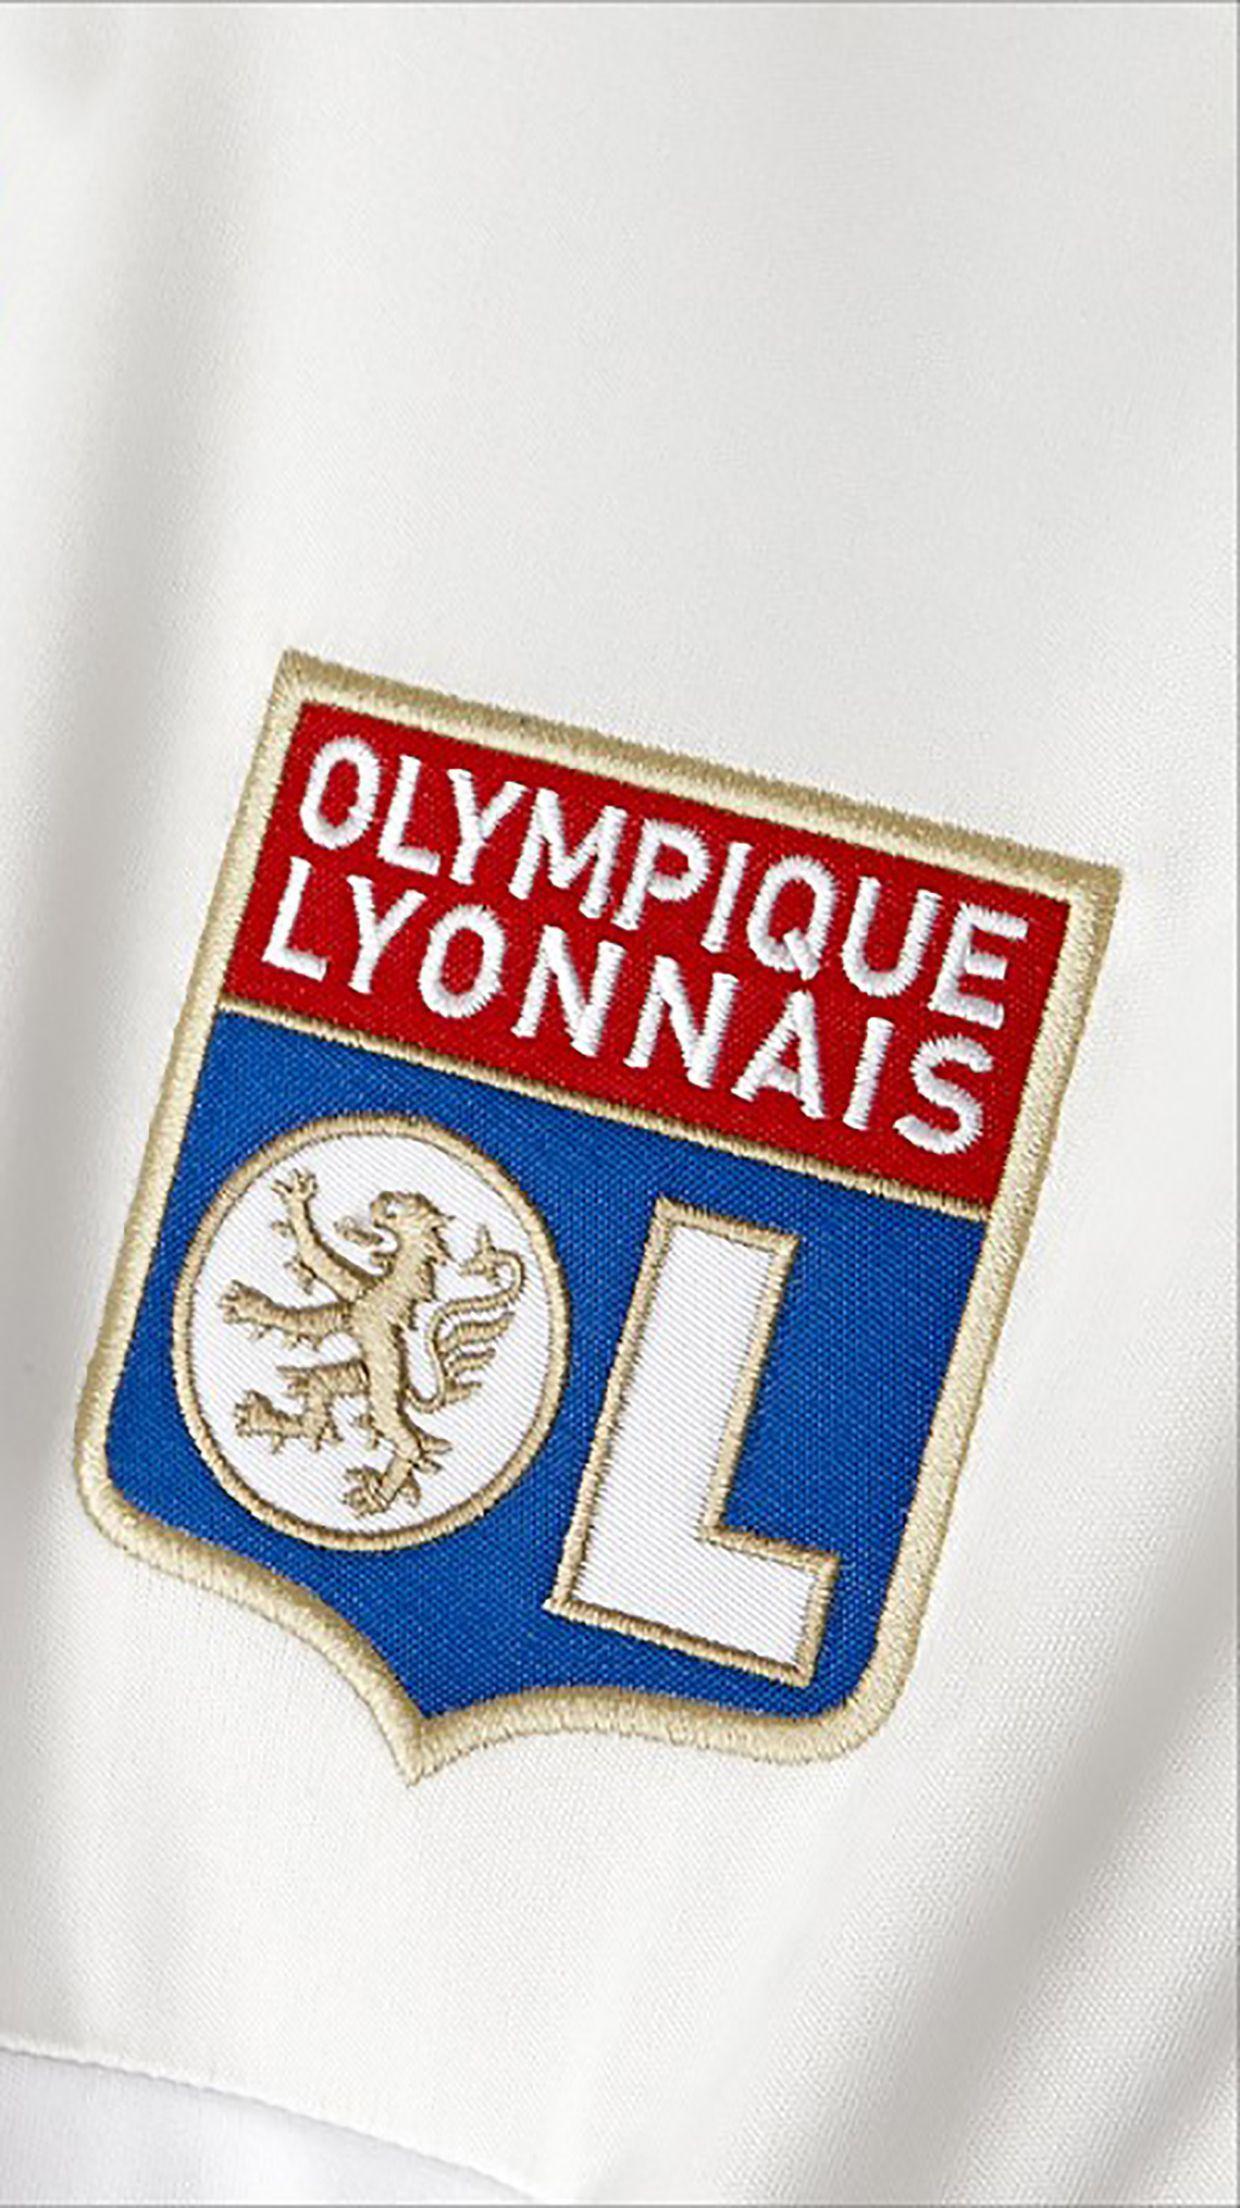 Olympique Lyonnais Wallpapers - Top Free Olympique Lyonnais Backgrounds ...